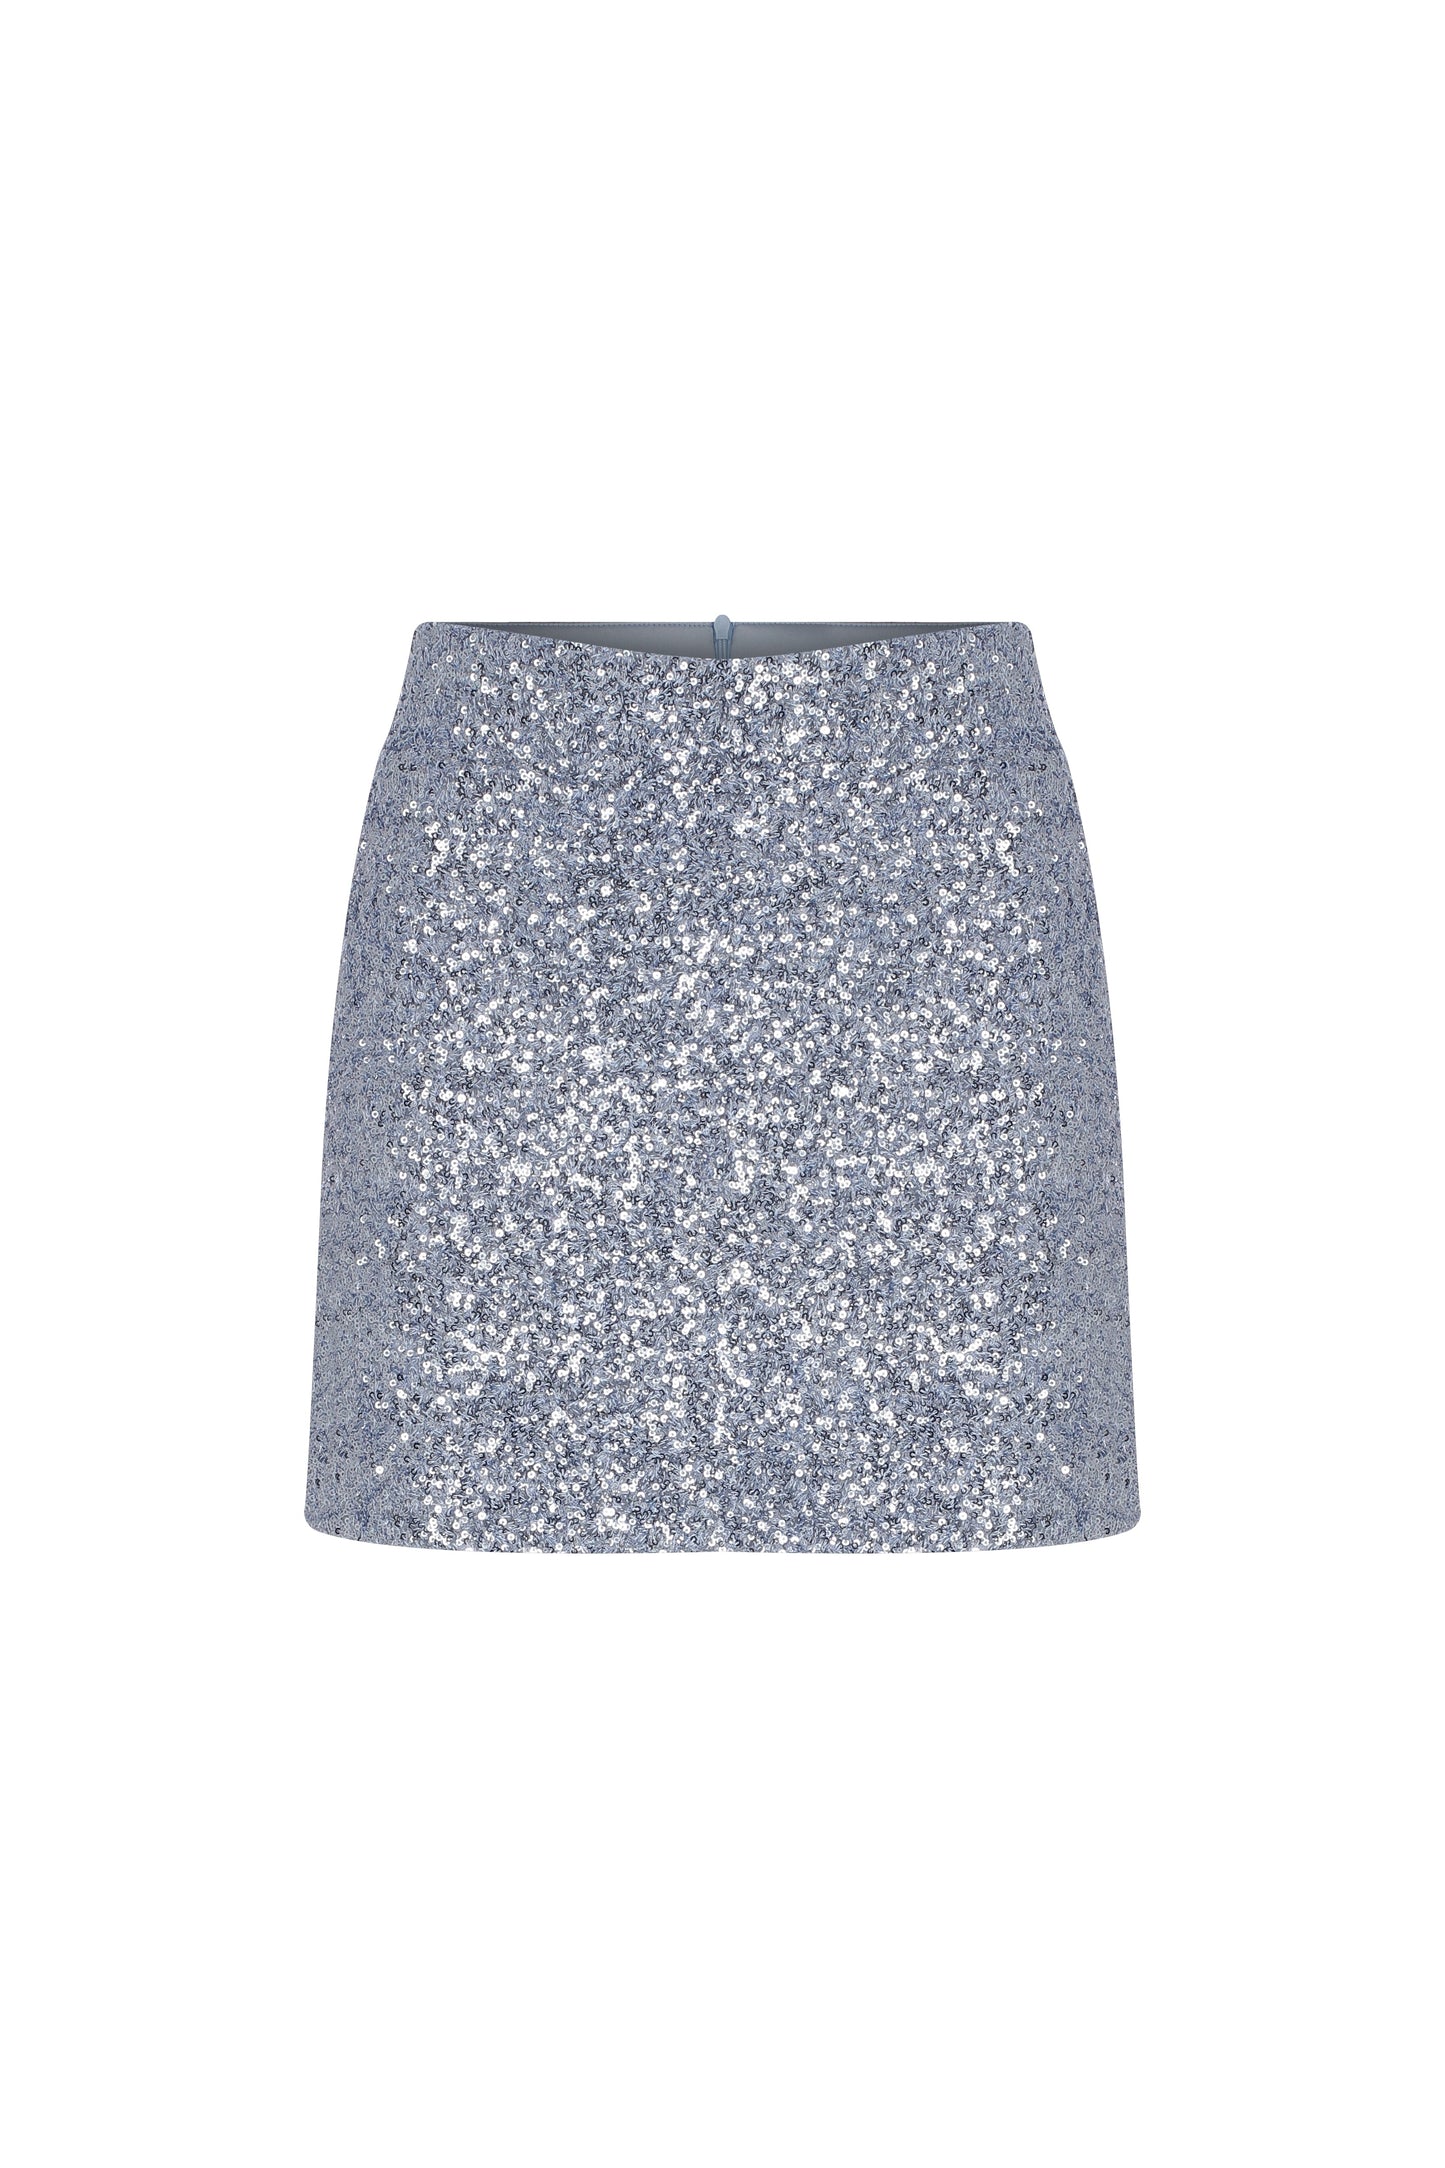 Marde A-Line Sequin Mini Skirt in Powder Blue